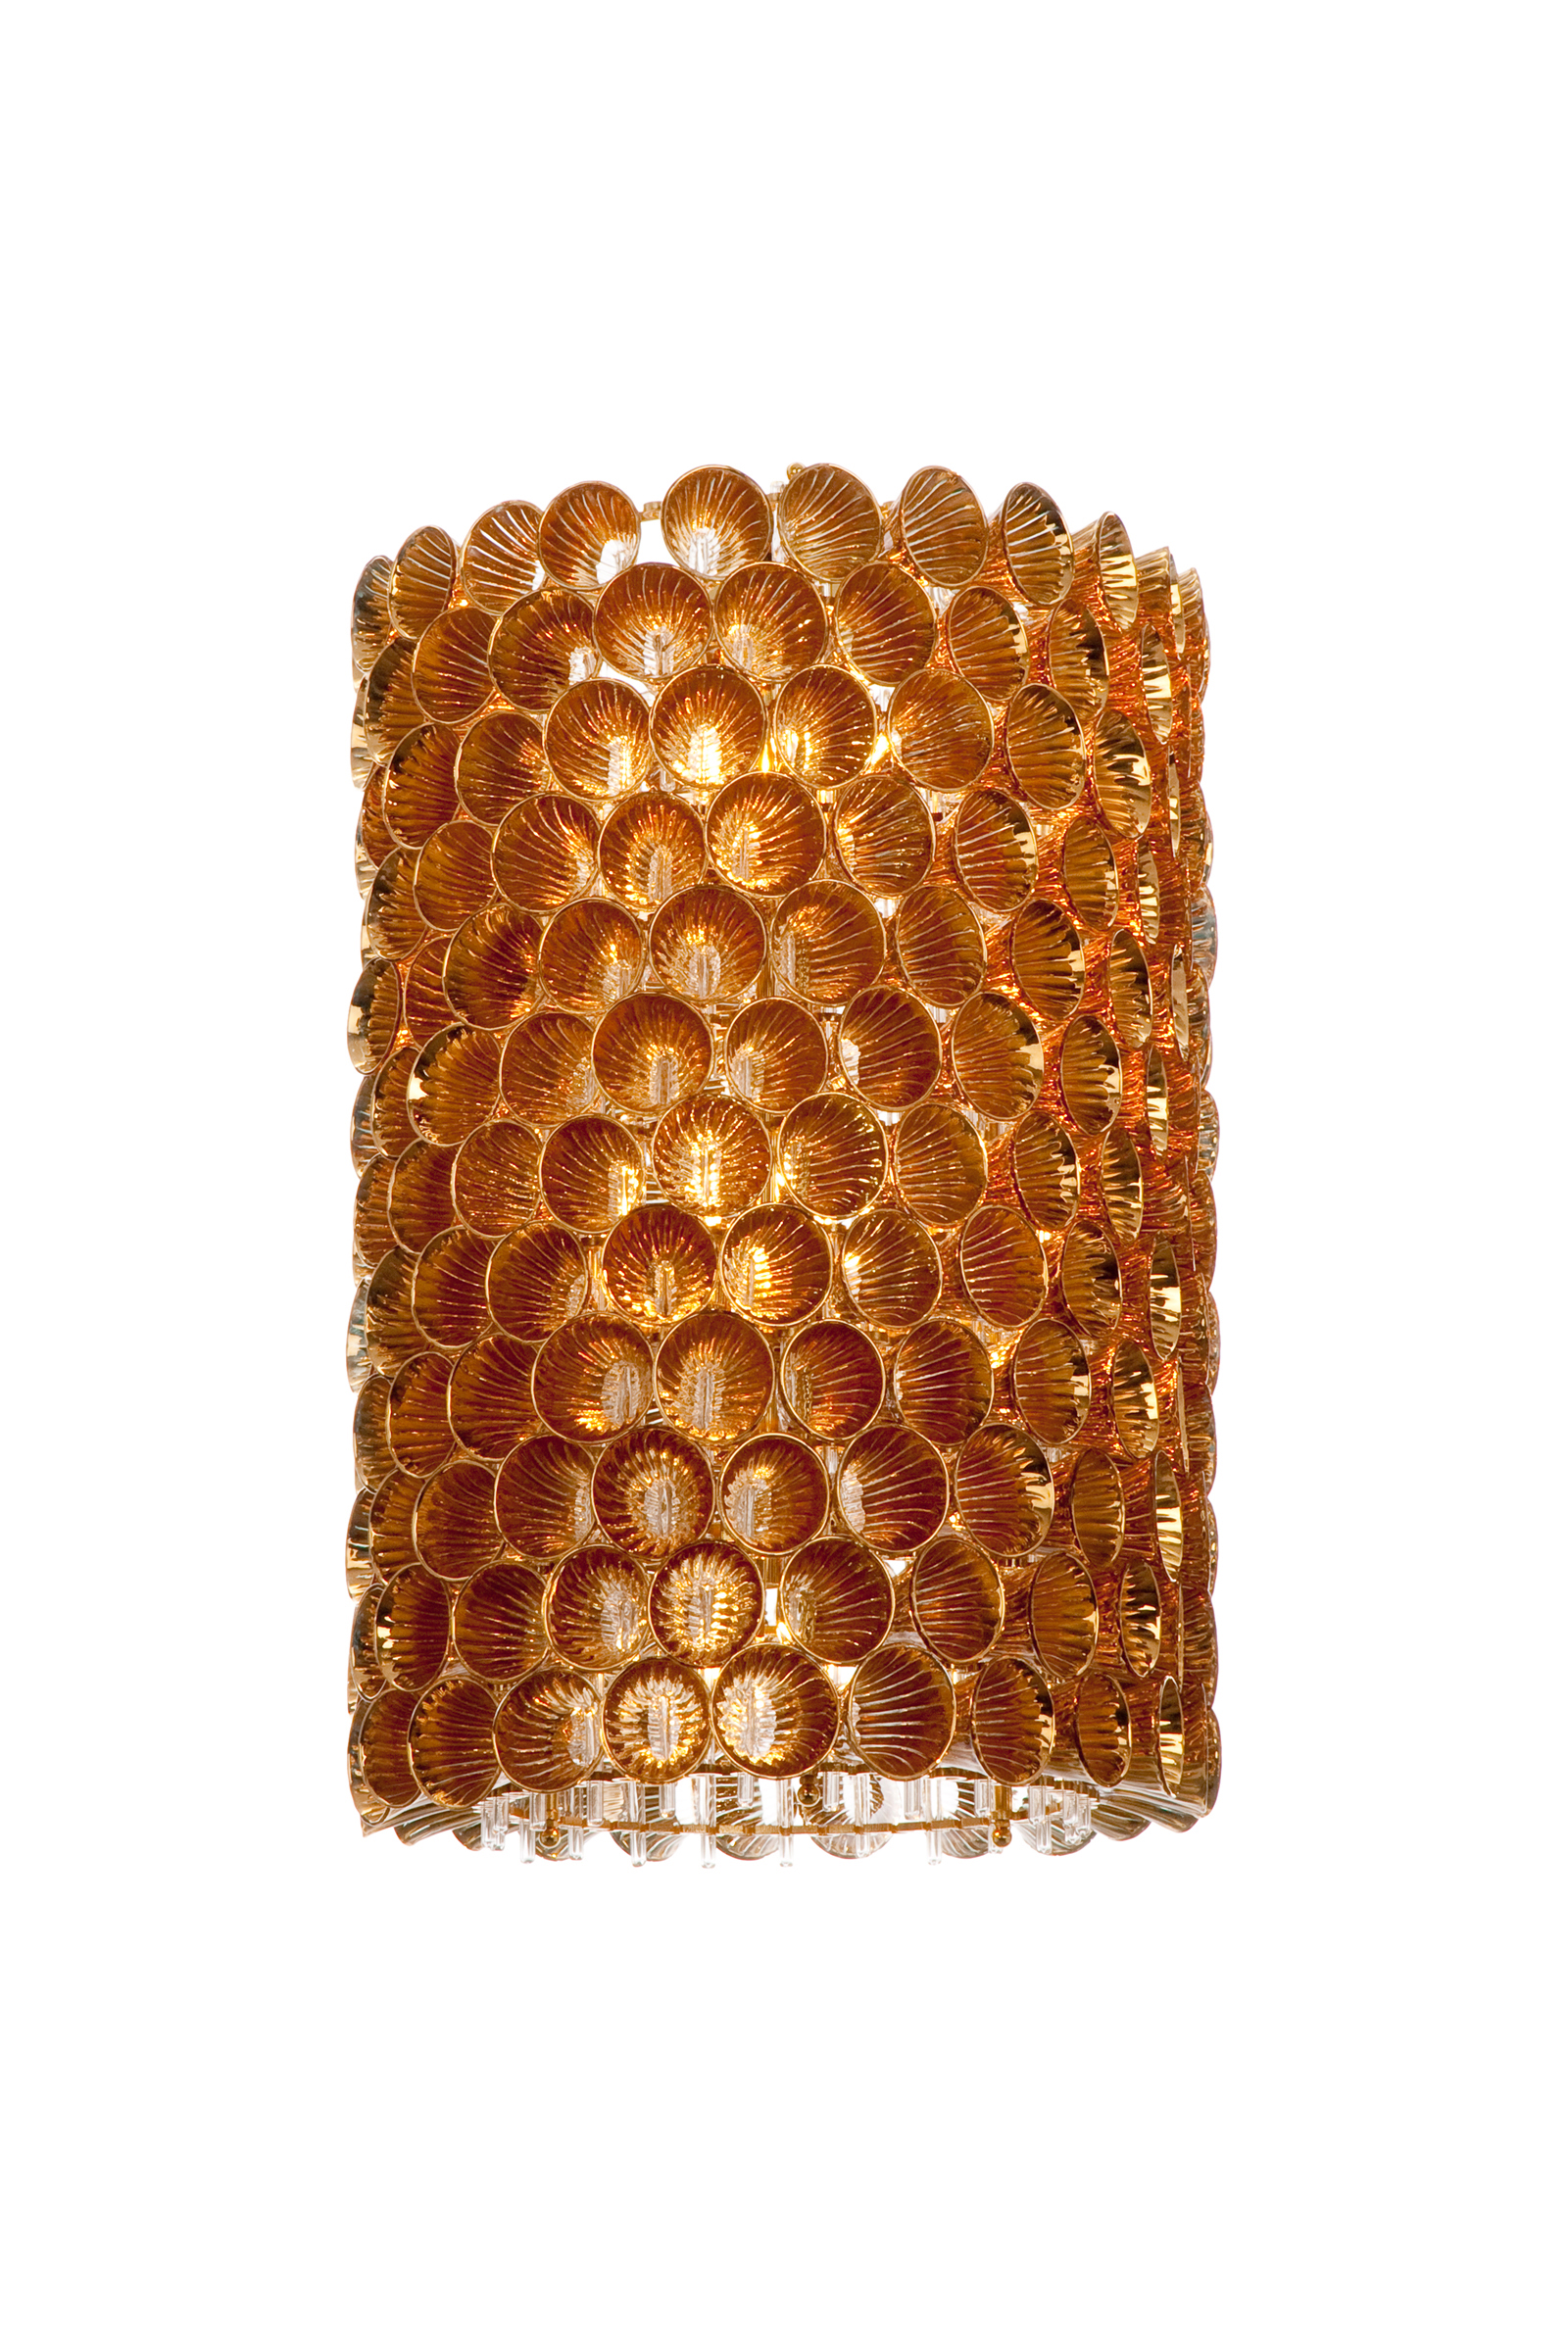 corail-suspension-gold-veronese-gmaurizio-galante-tal-lancman-11.jpg